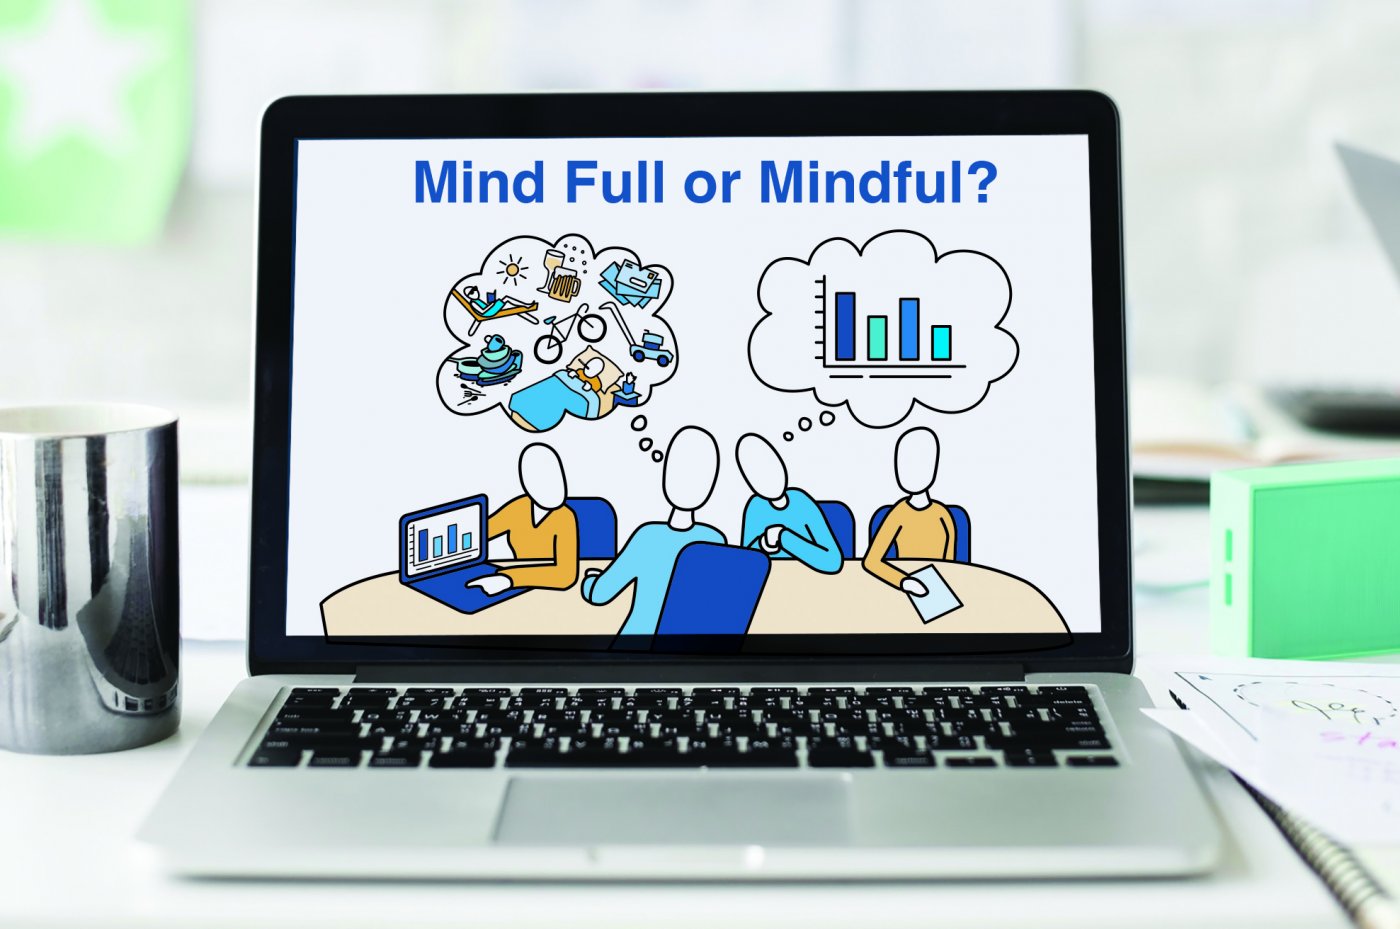 Mind Full or Mindful mindfulness illustration on computer